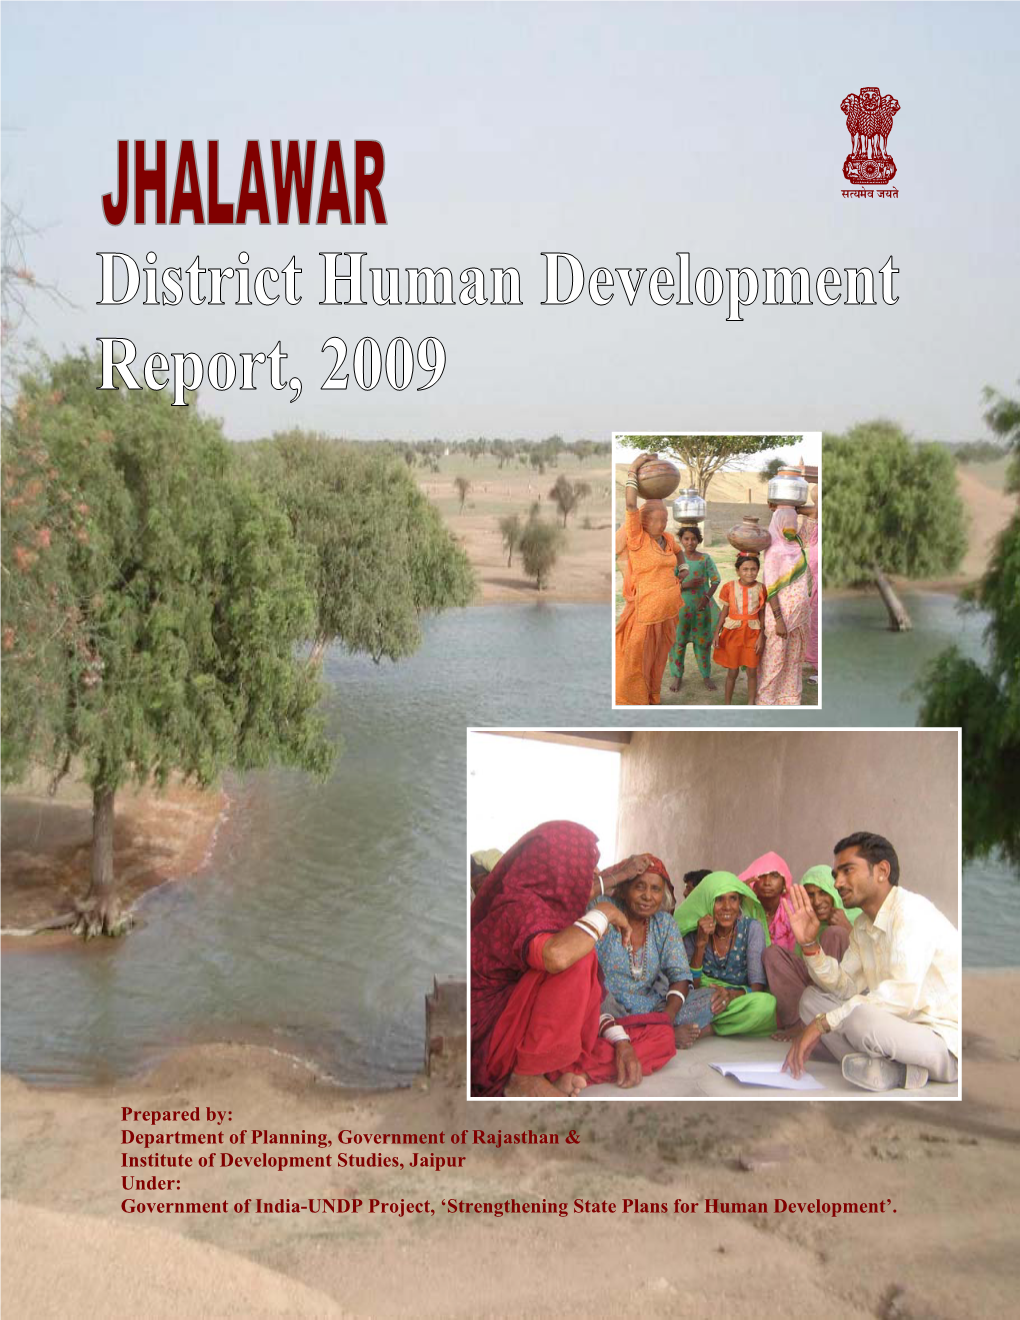 Jhalawar District Human Development Profile